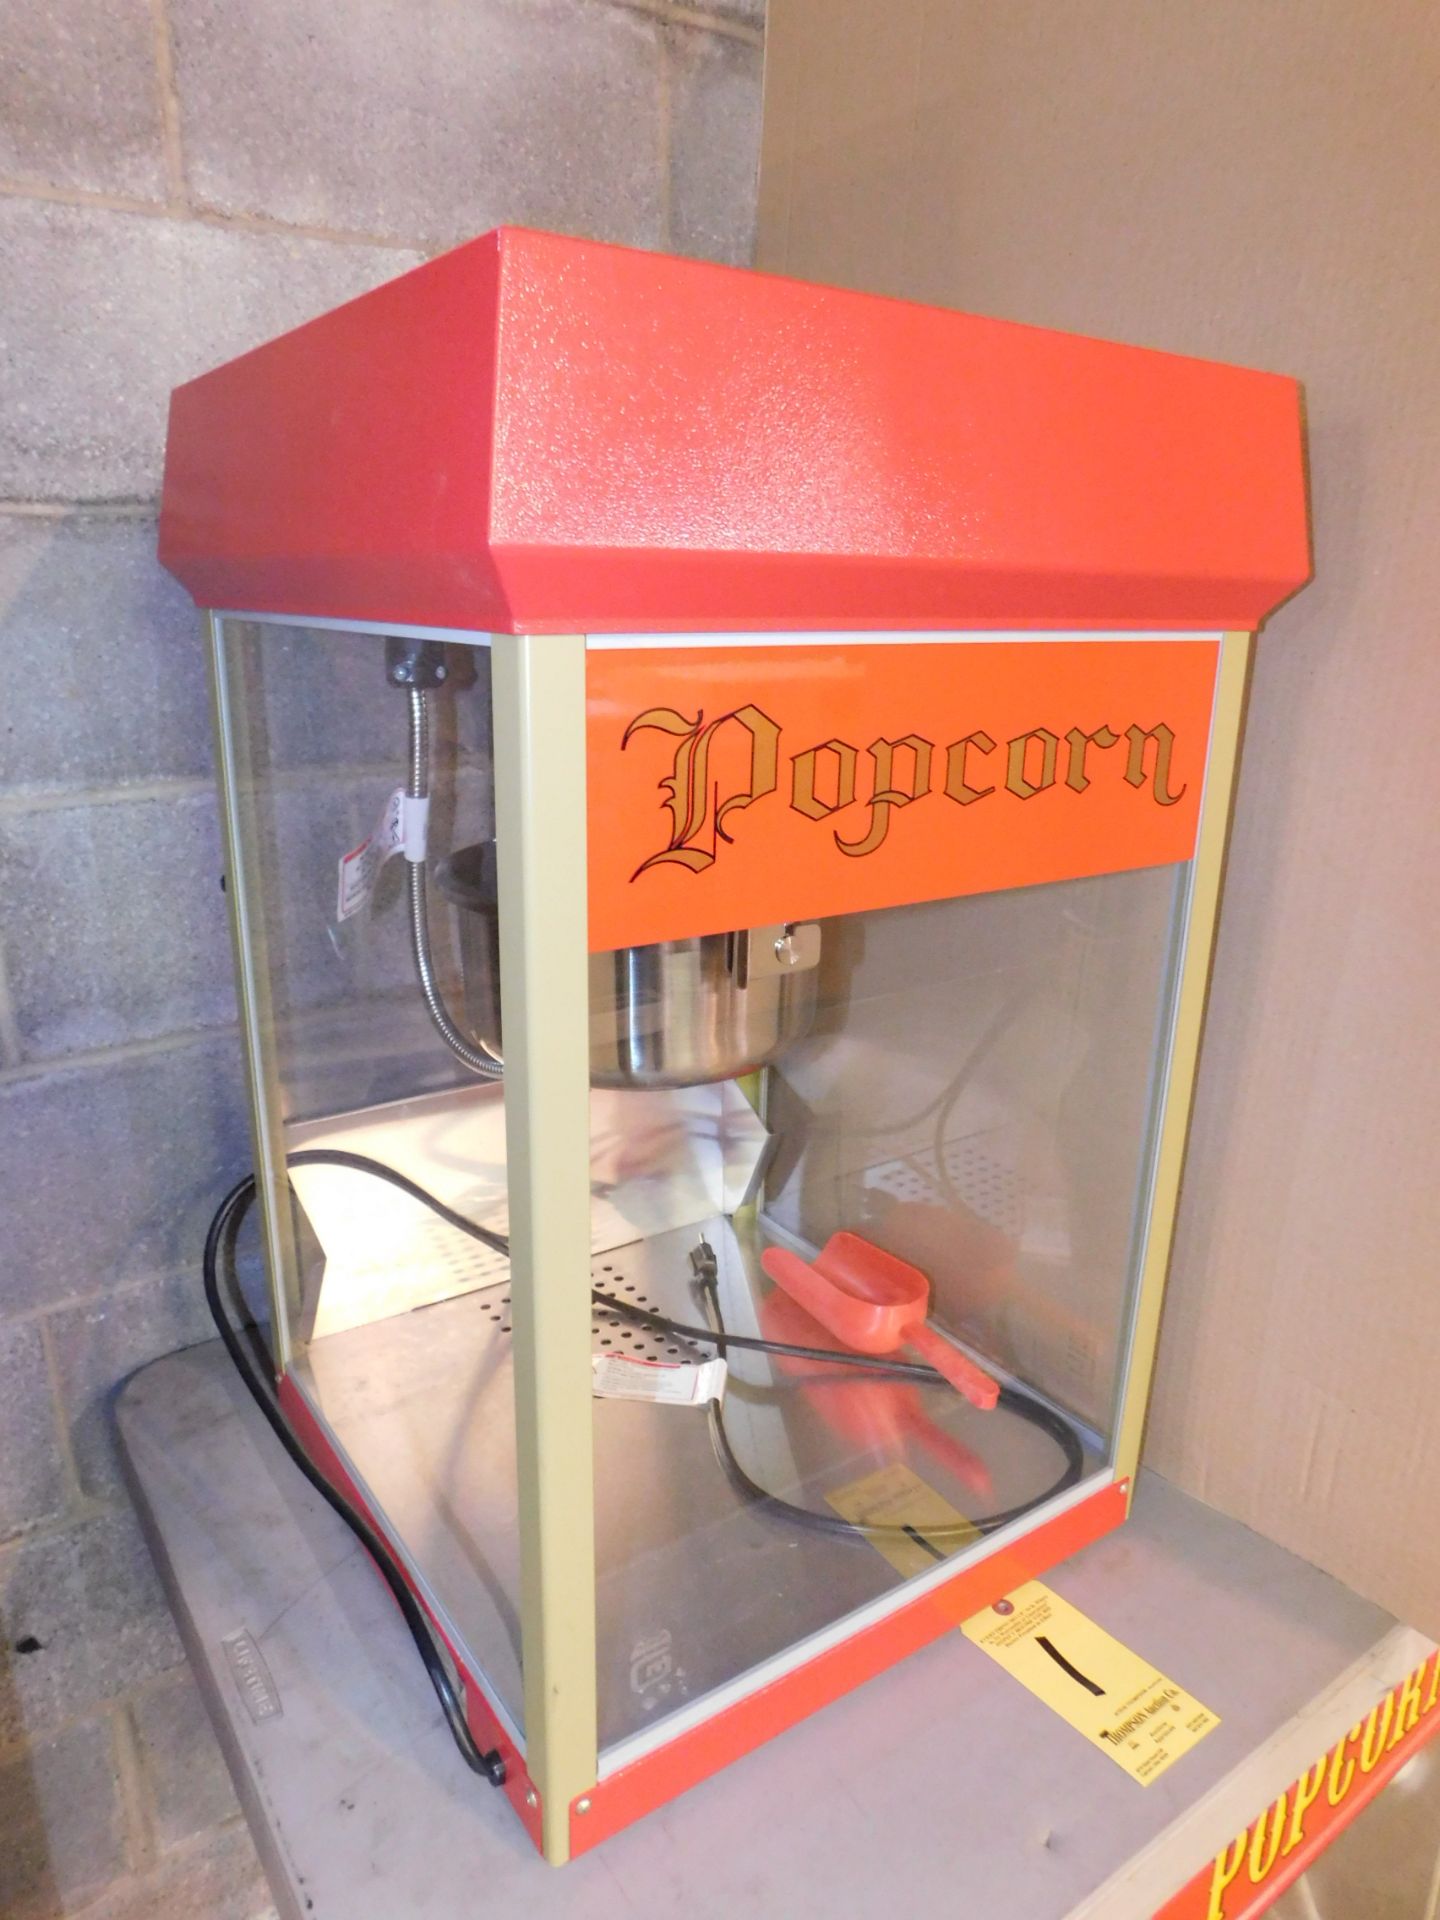 Funpop Model 2408 Popcorn Popping Machine - NEW